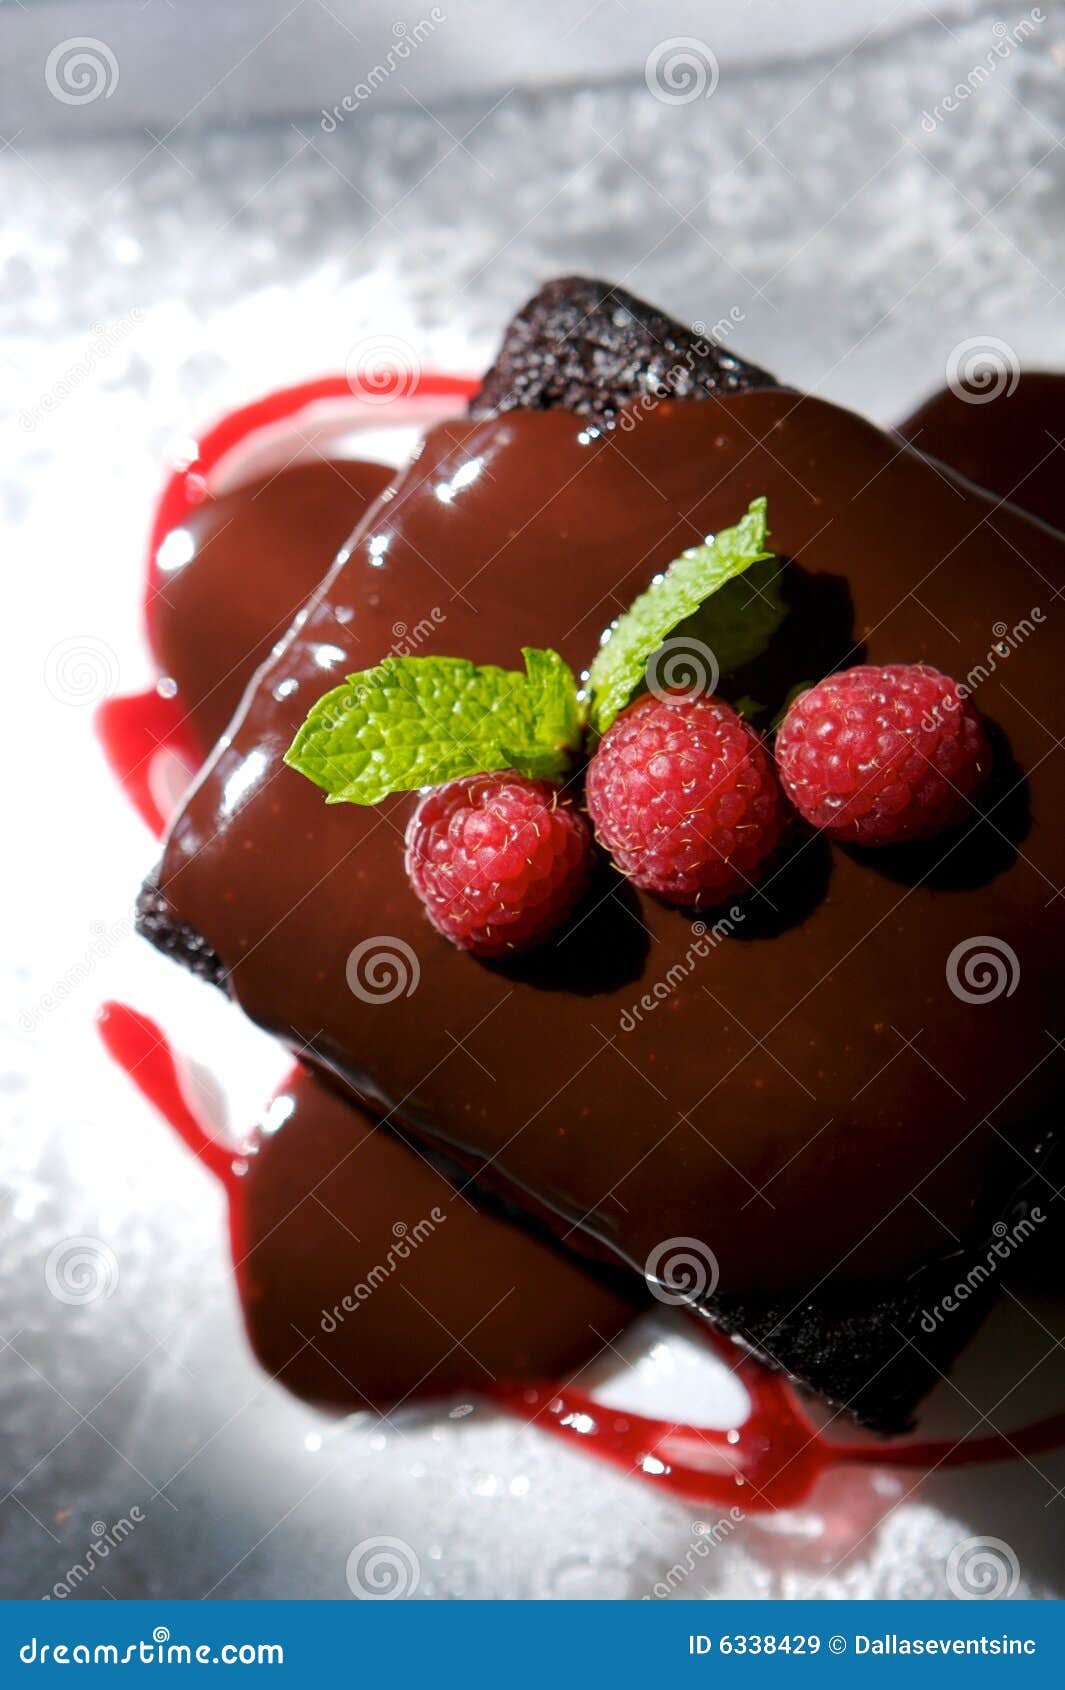 decadent chocolate cake with raspberries